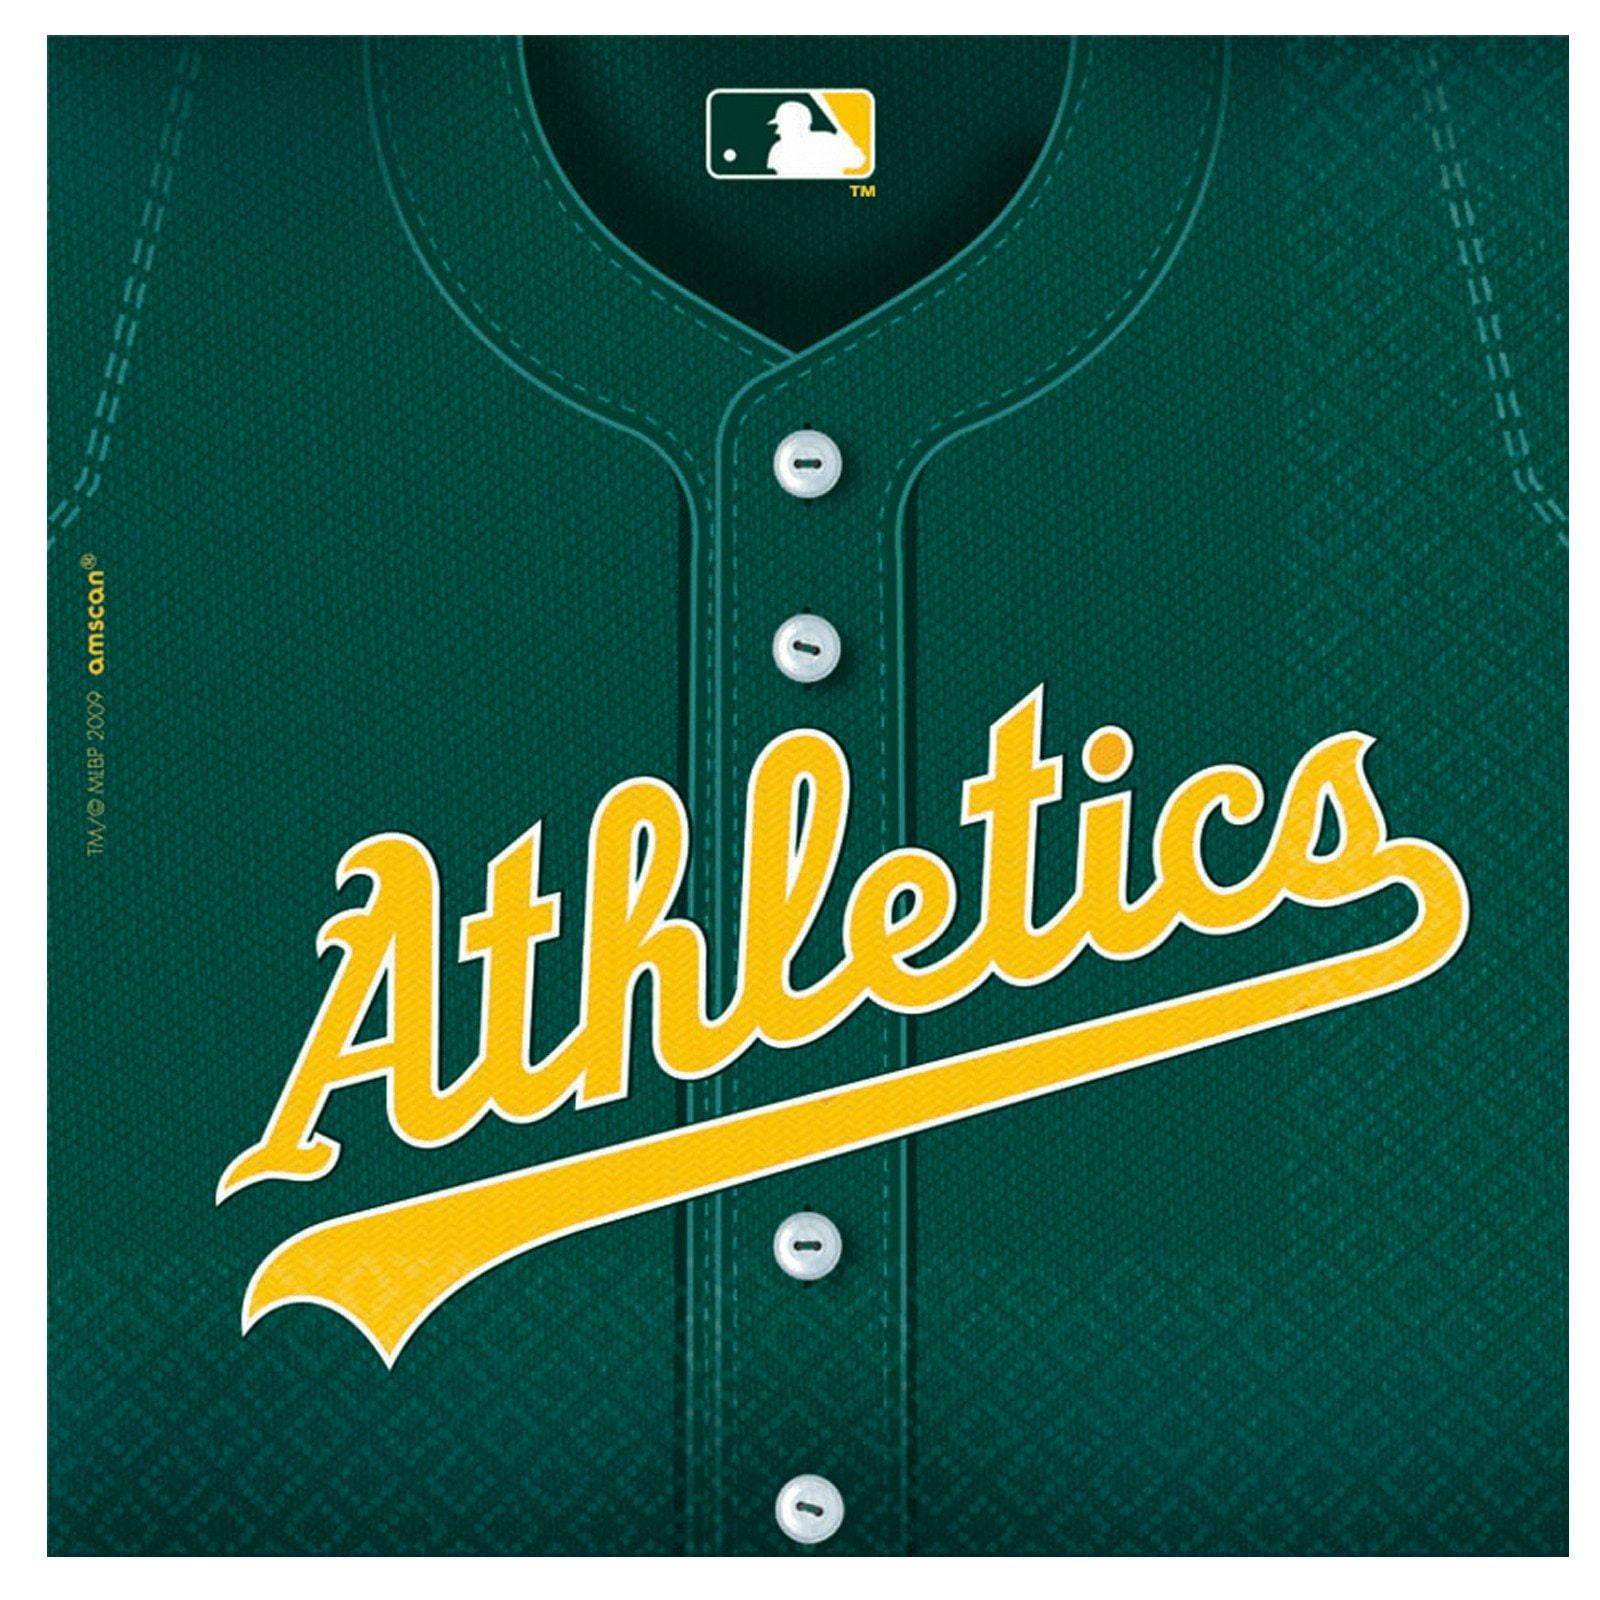 Download Oakland Athletics Baseball Jersey Wallpaper